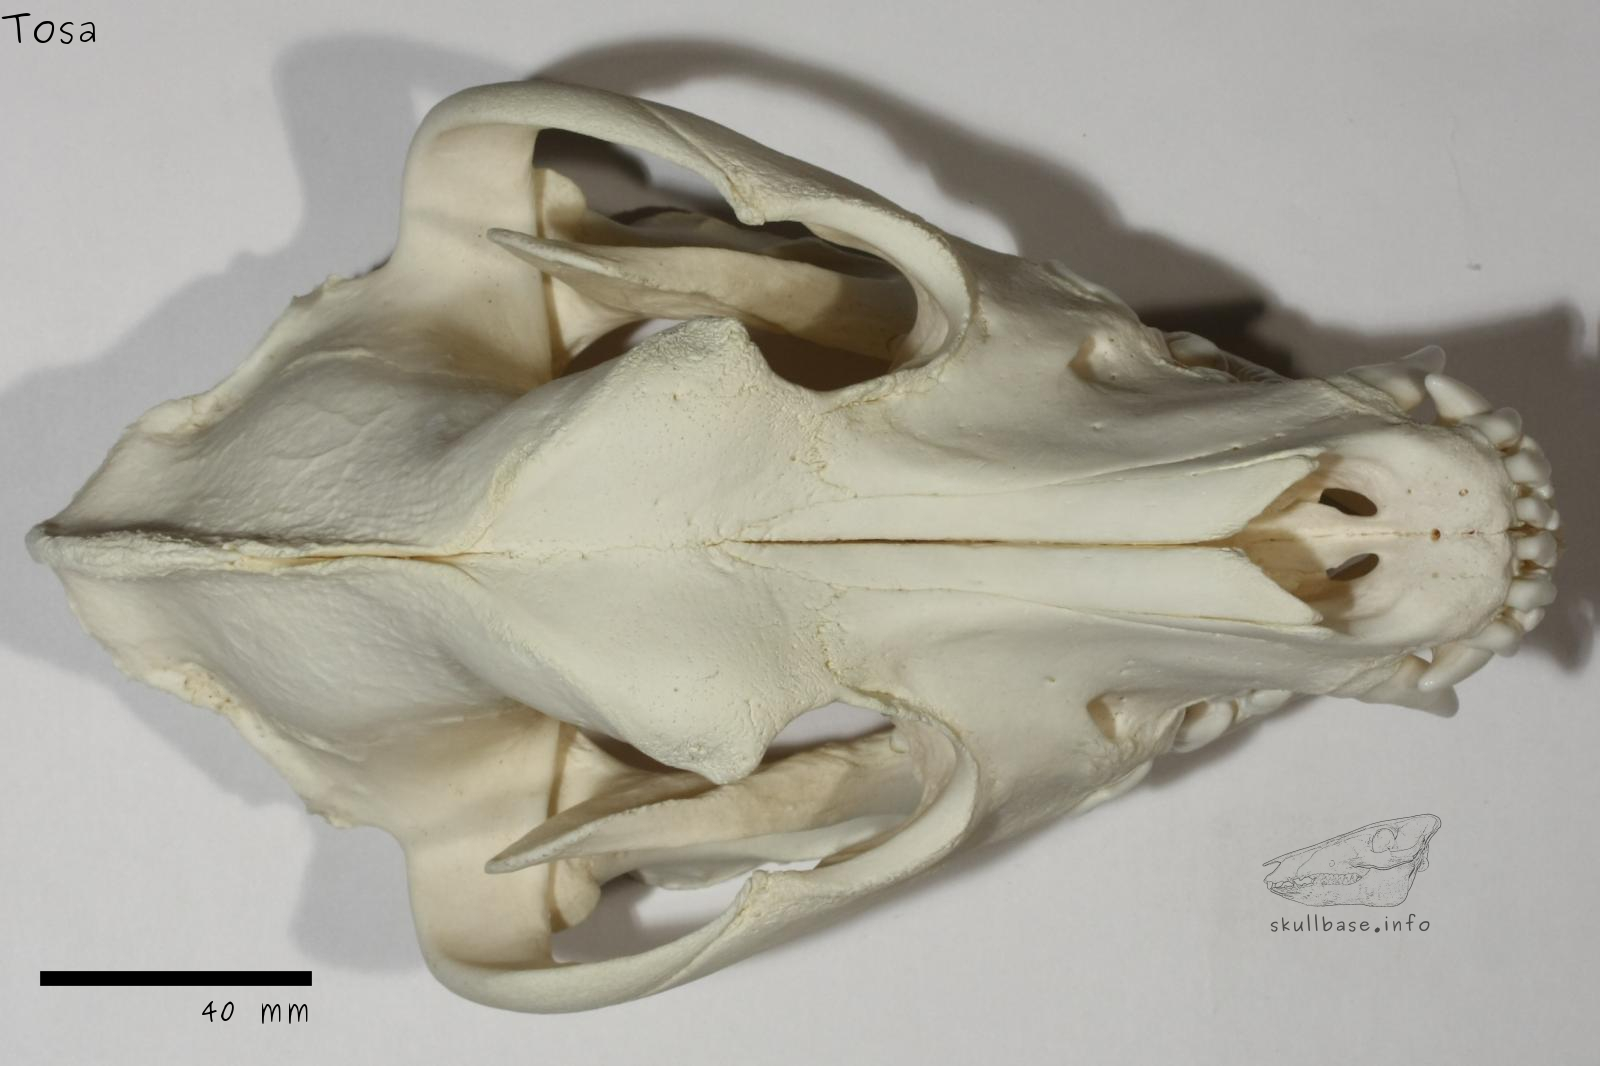 Tosa (Canis lupus familiaris) skull dorsal view